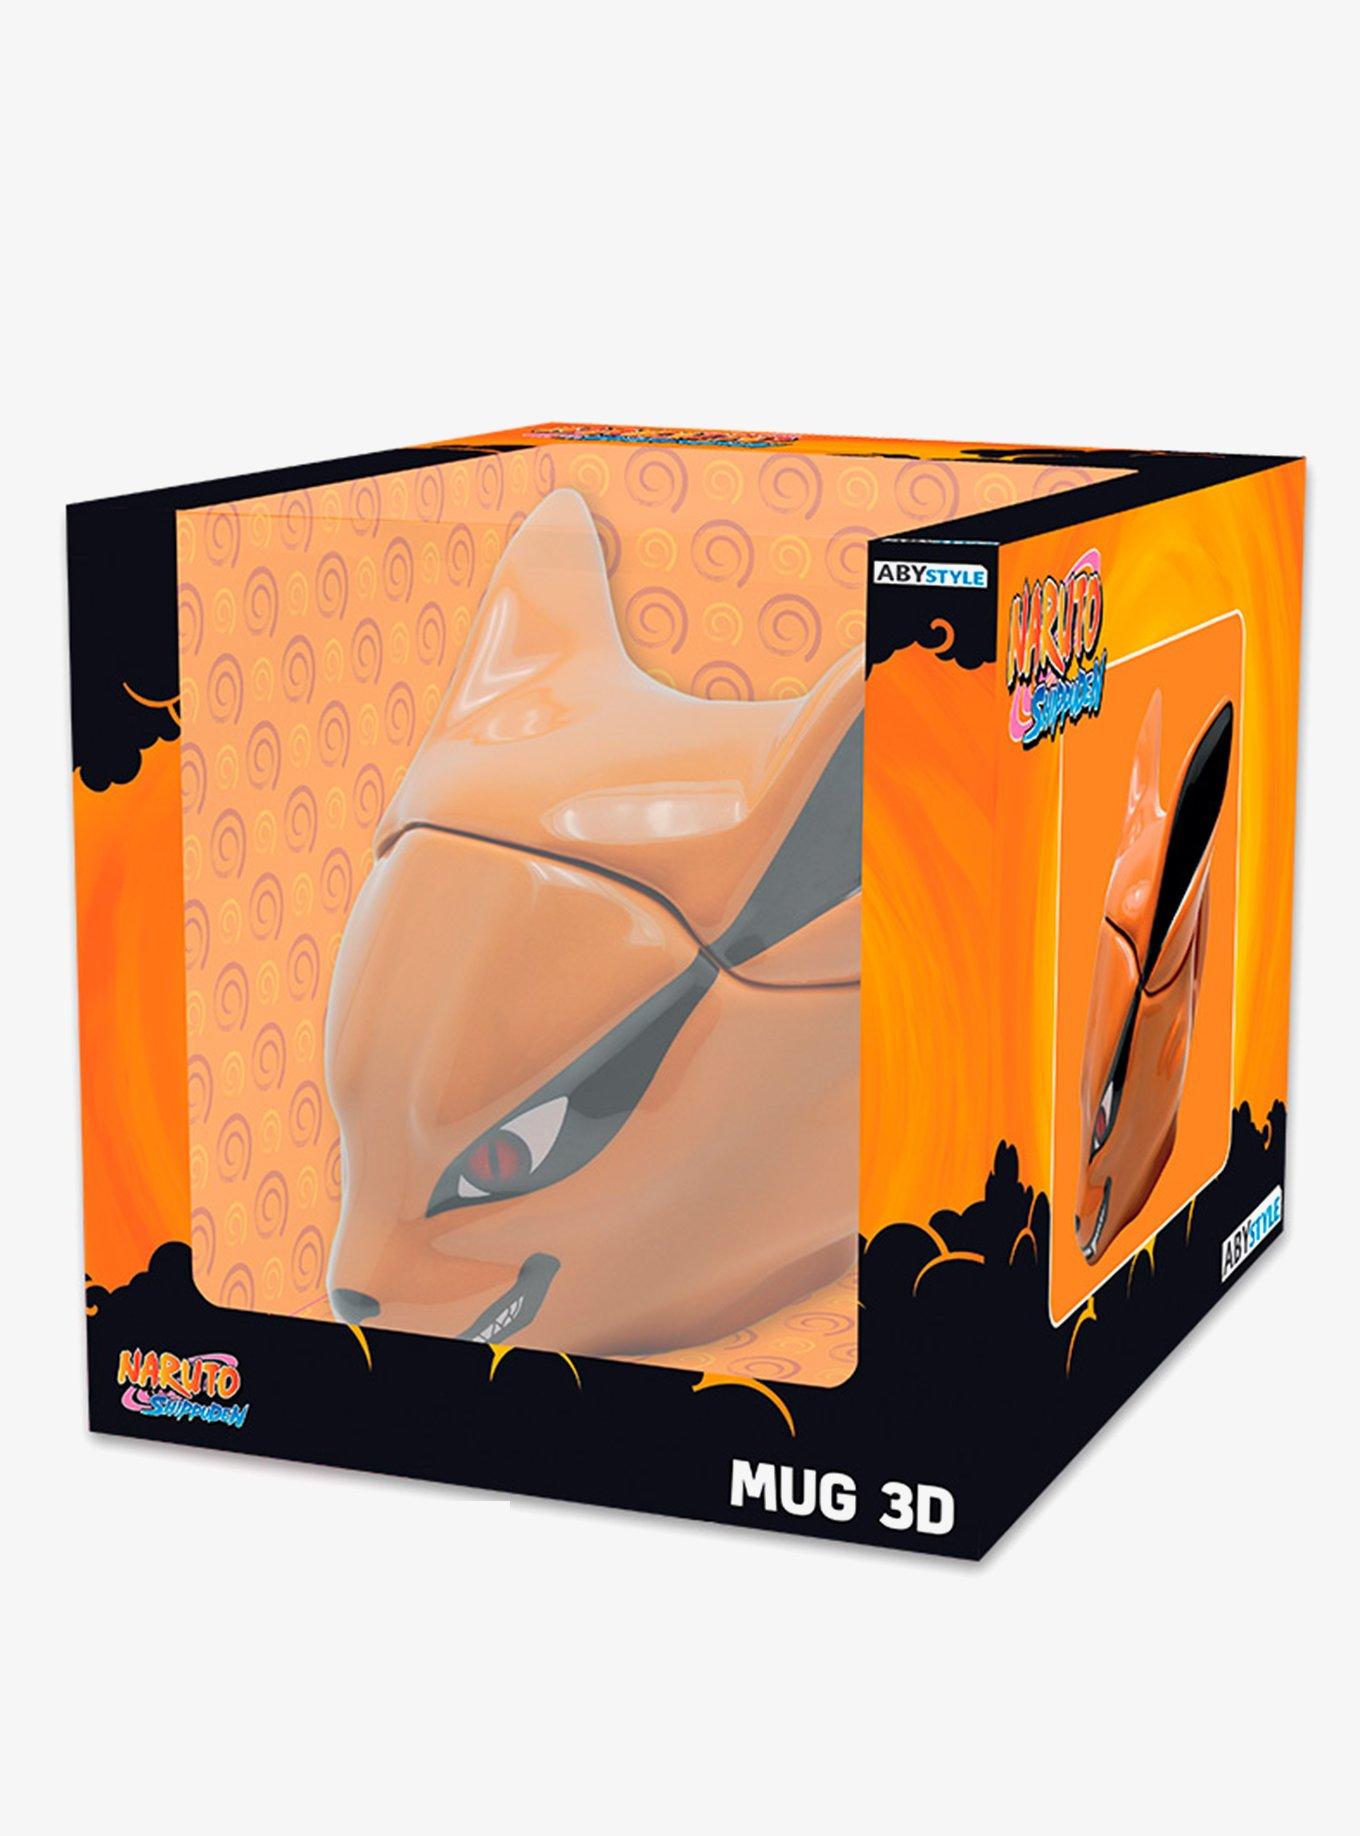 https://media.gamestop.com/i/gamestop/20005627_ALT06/Naruto-Shippuden-3D-Mug-and-SFC-Figure-Set?$pdp$